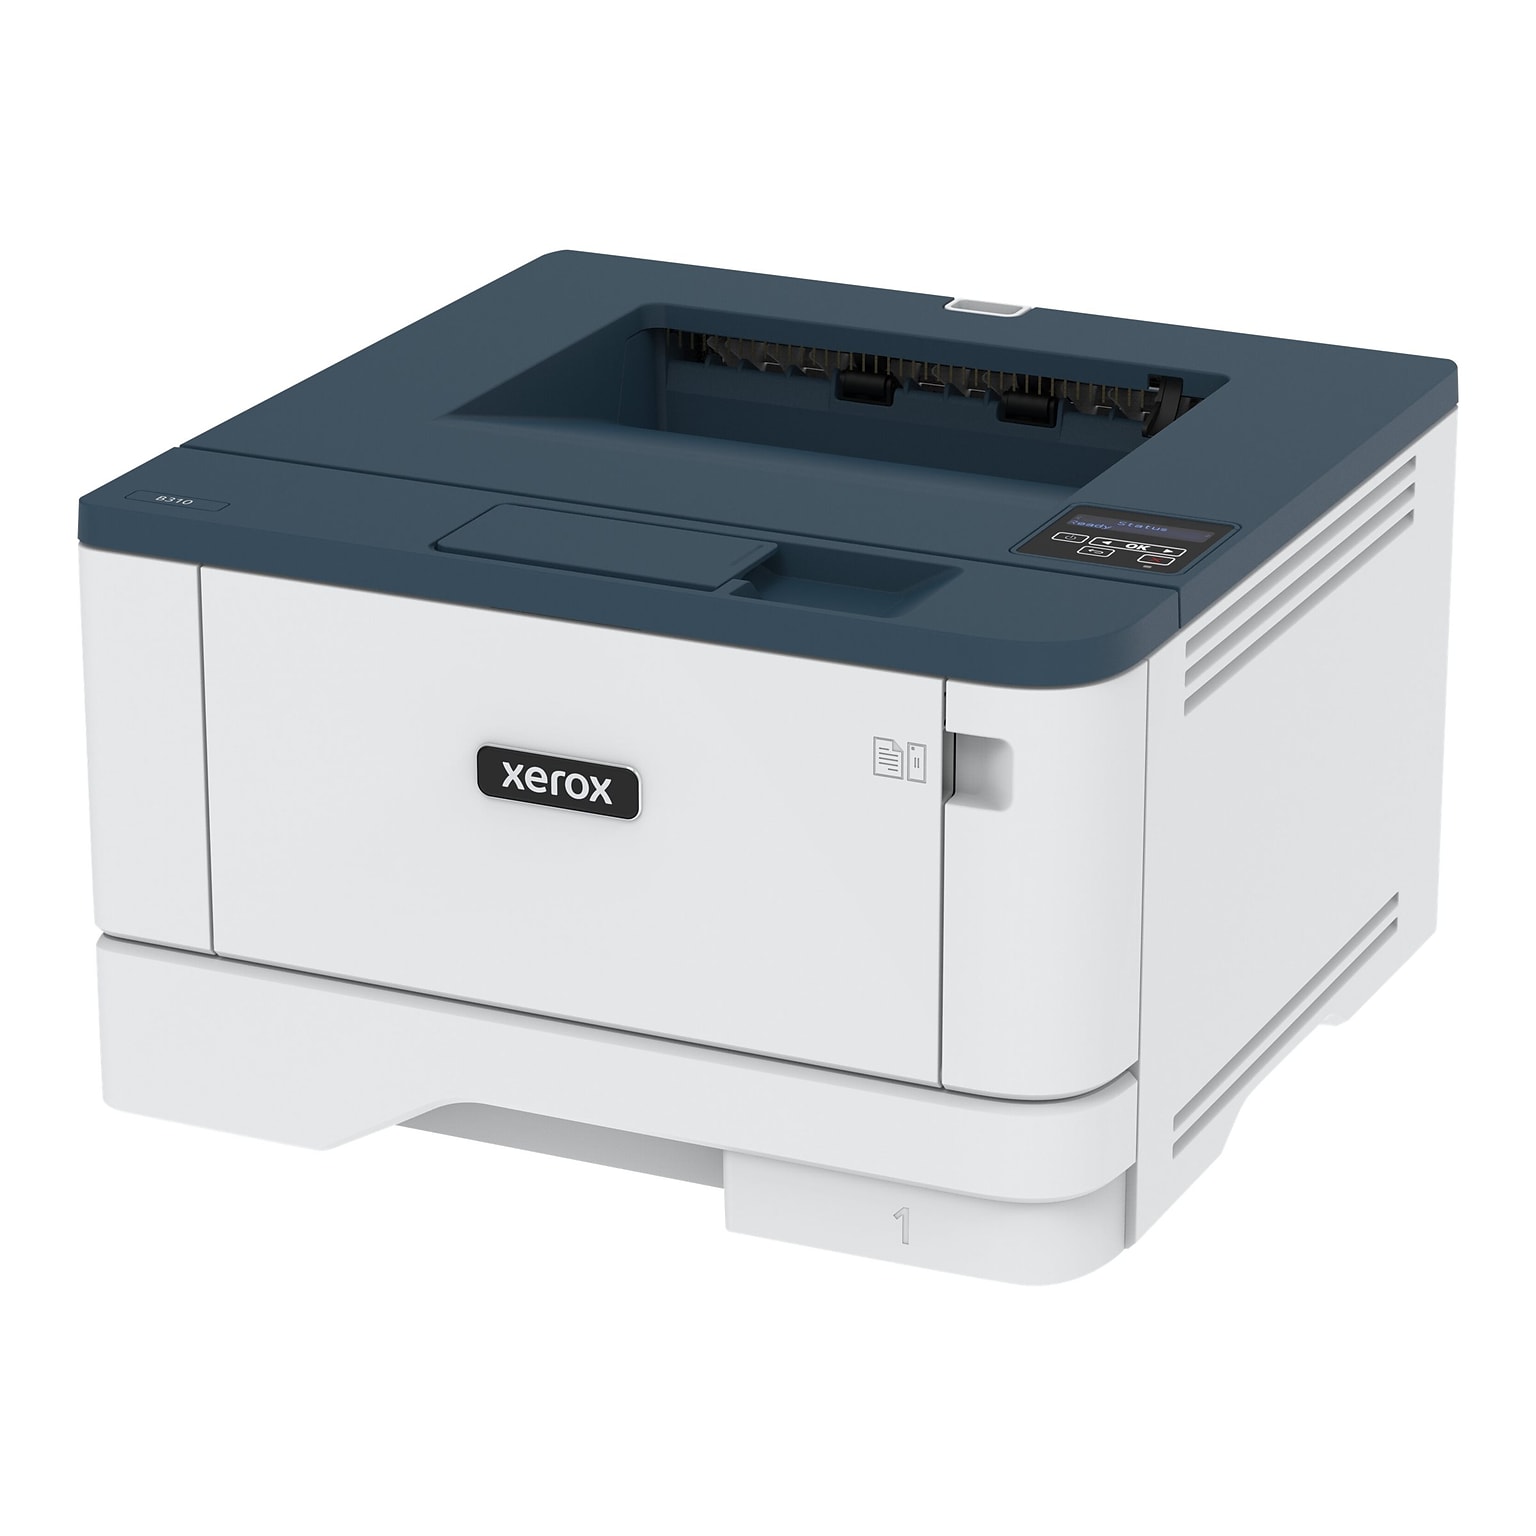 Xerox B310 Wireless Black and White Laser Printer (B310/DNI)